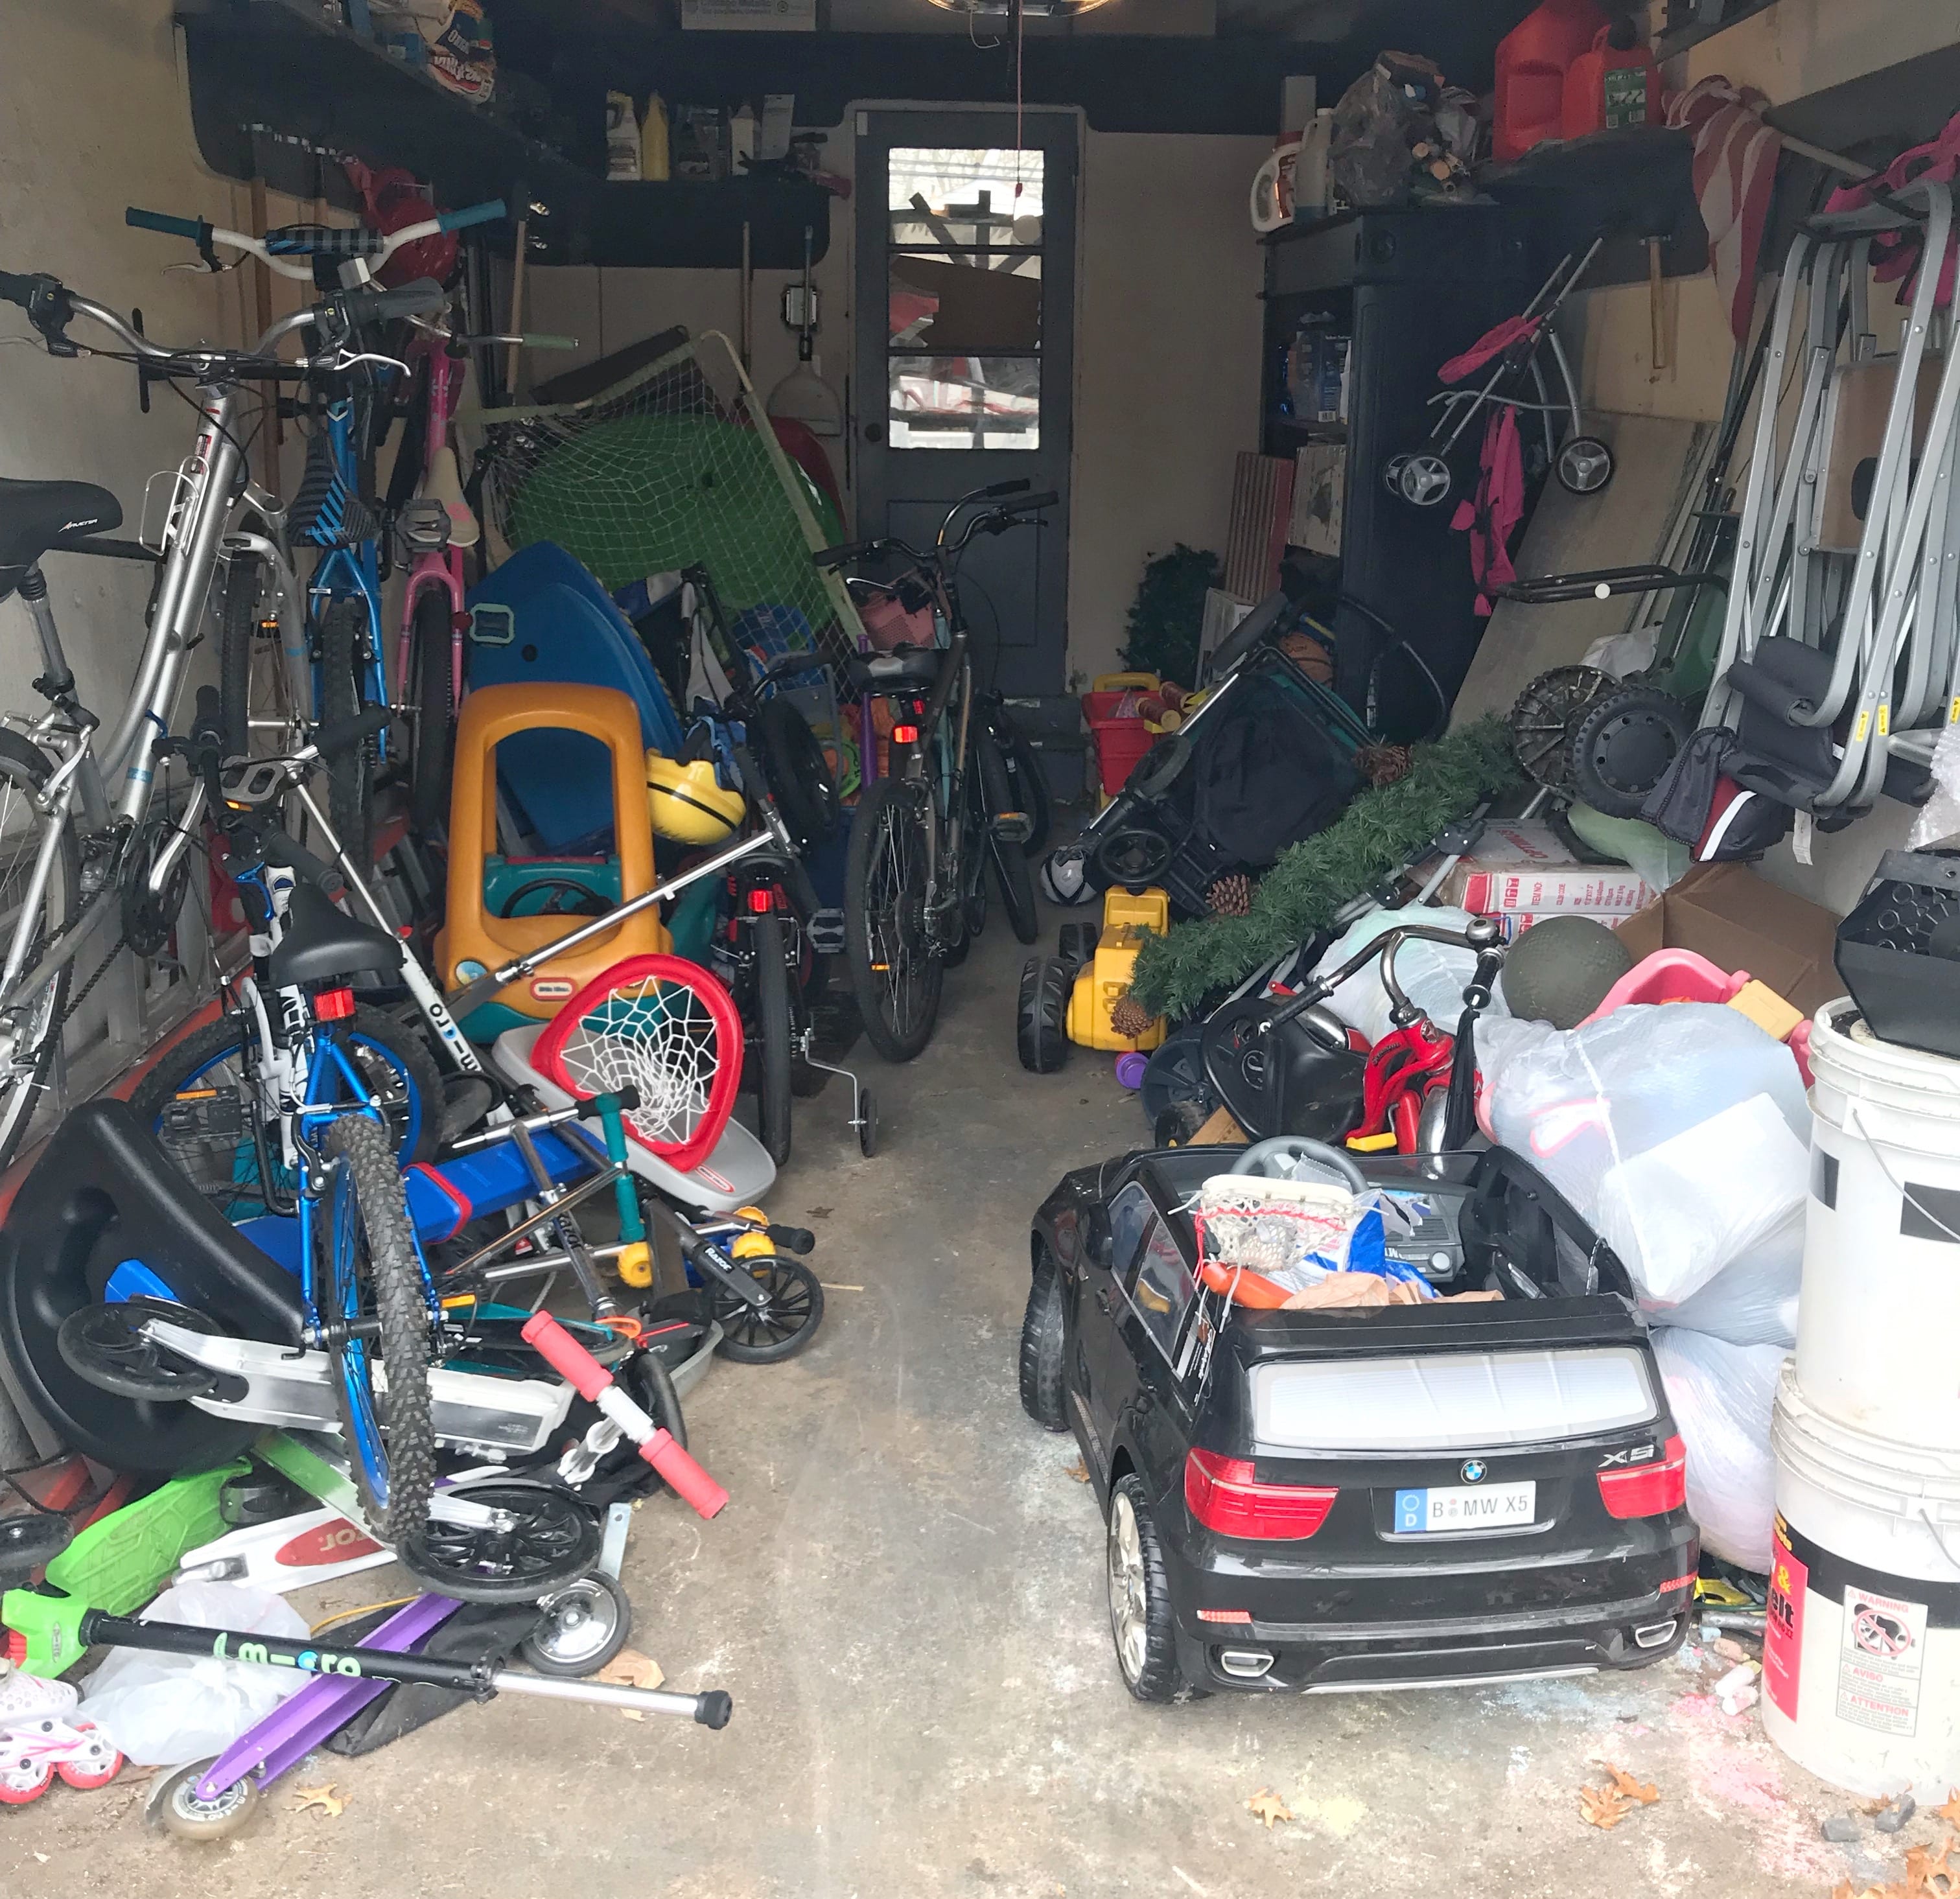 messy garage full